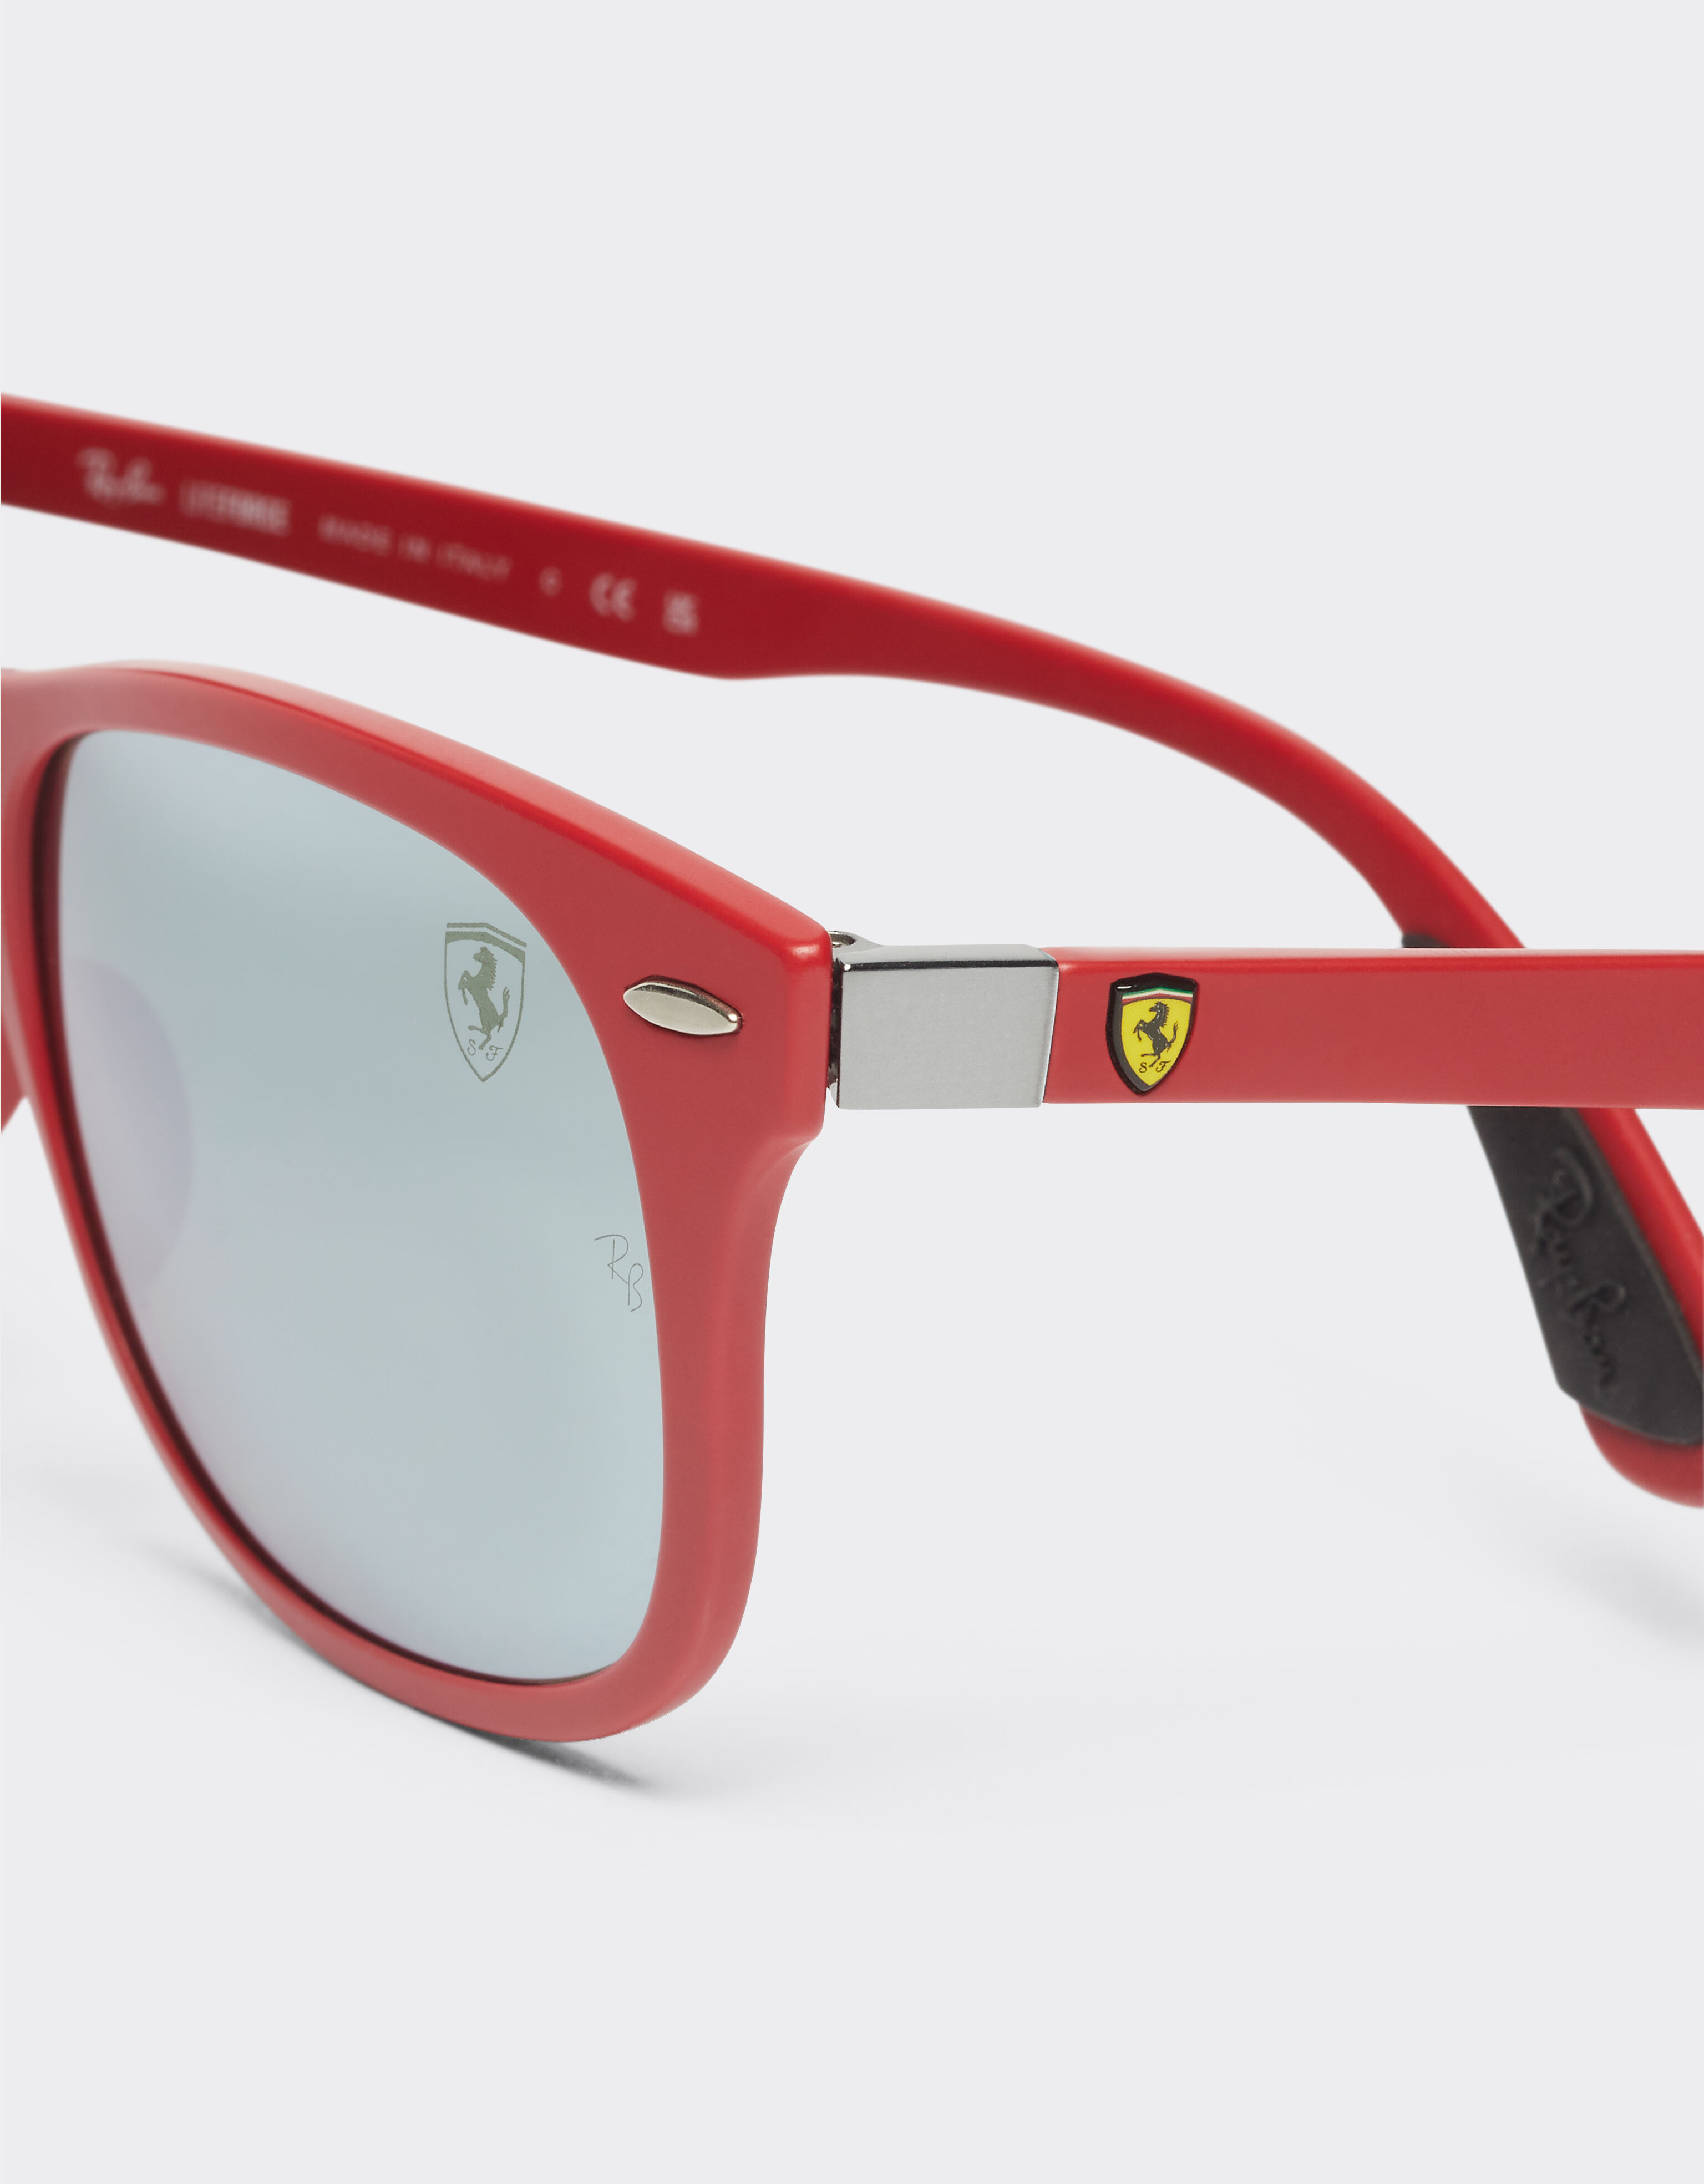 Ferrari Ray-Ban for Scuderia Ferrari 0RB4607M マットレッド サングラス シルバーミラーグリーンレンズ レッド F1298f